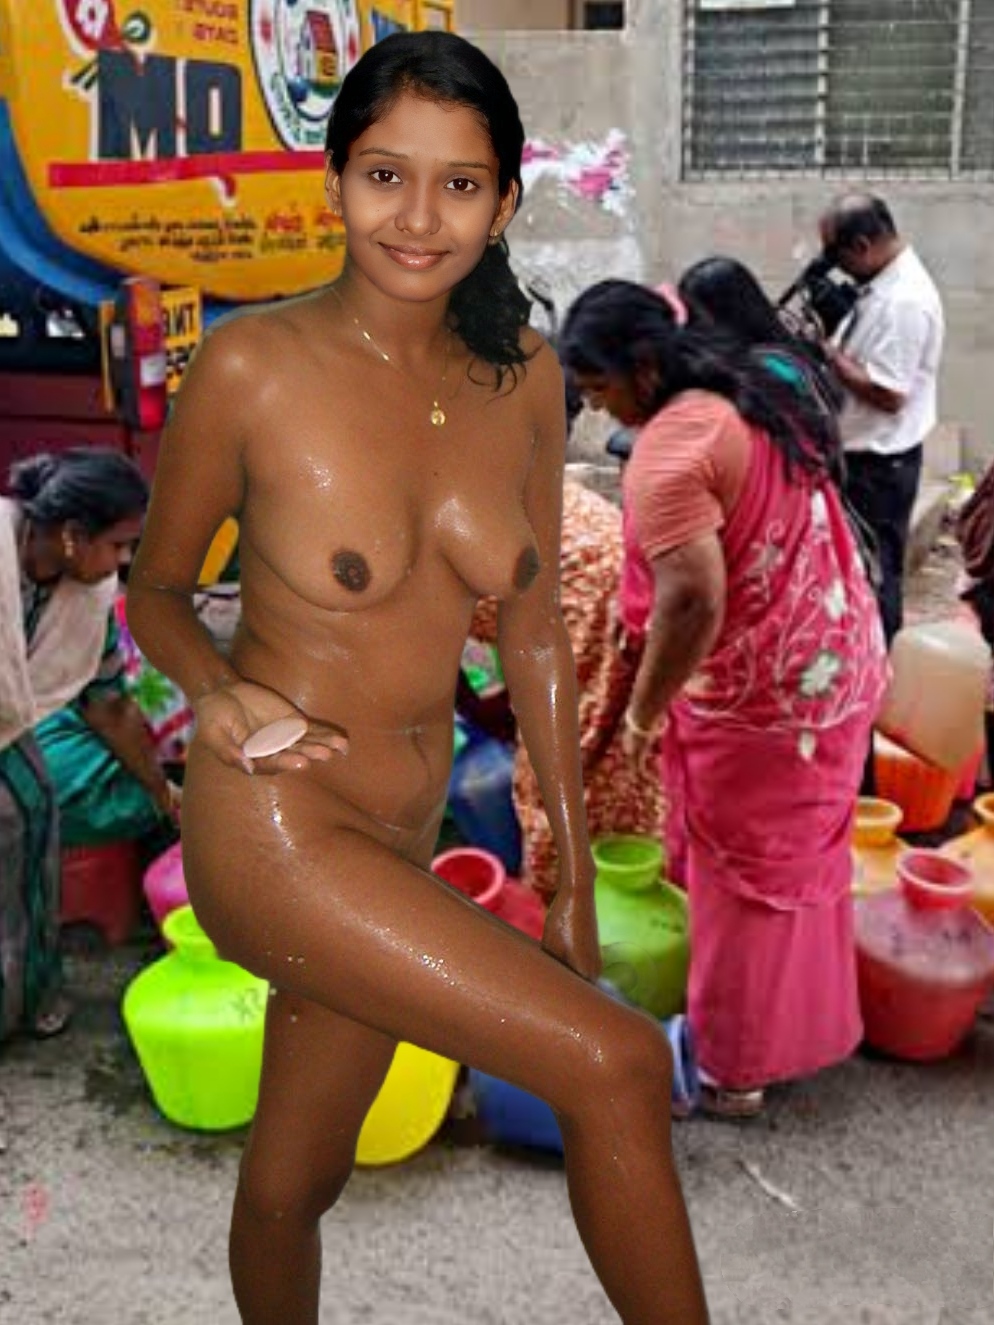 Nude Tamil Girls Public - Sindhuja Tamil Girl Nude In Public, Sindhuja thevidiya nude (108 pictures)  - Shooshtime